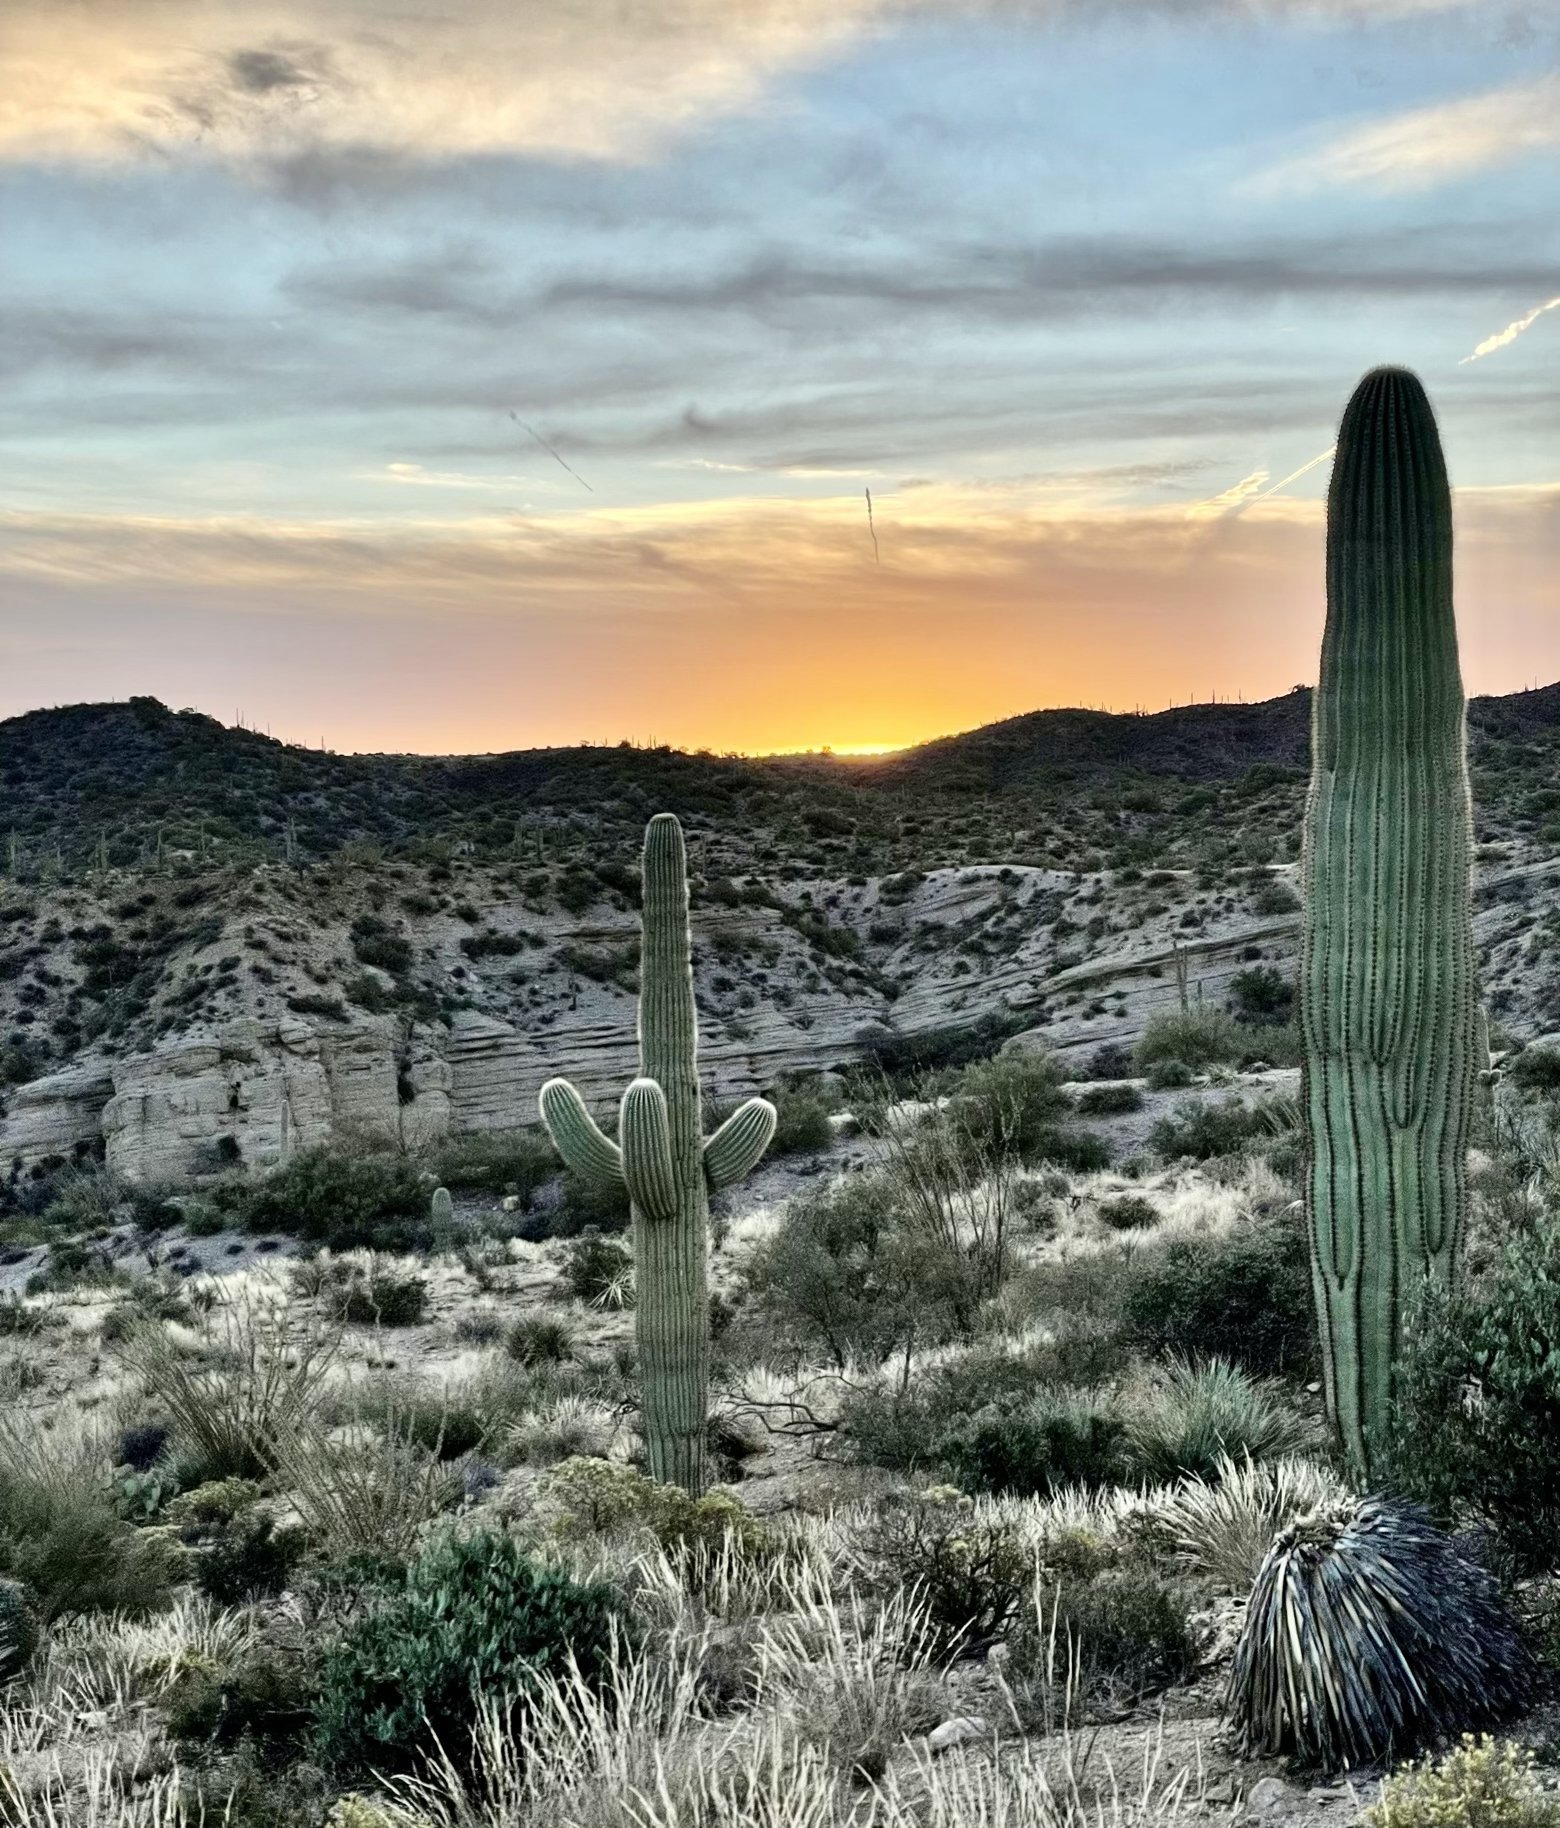 Rise and shine, saguaro